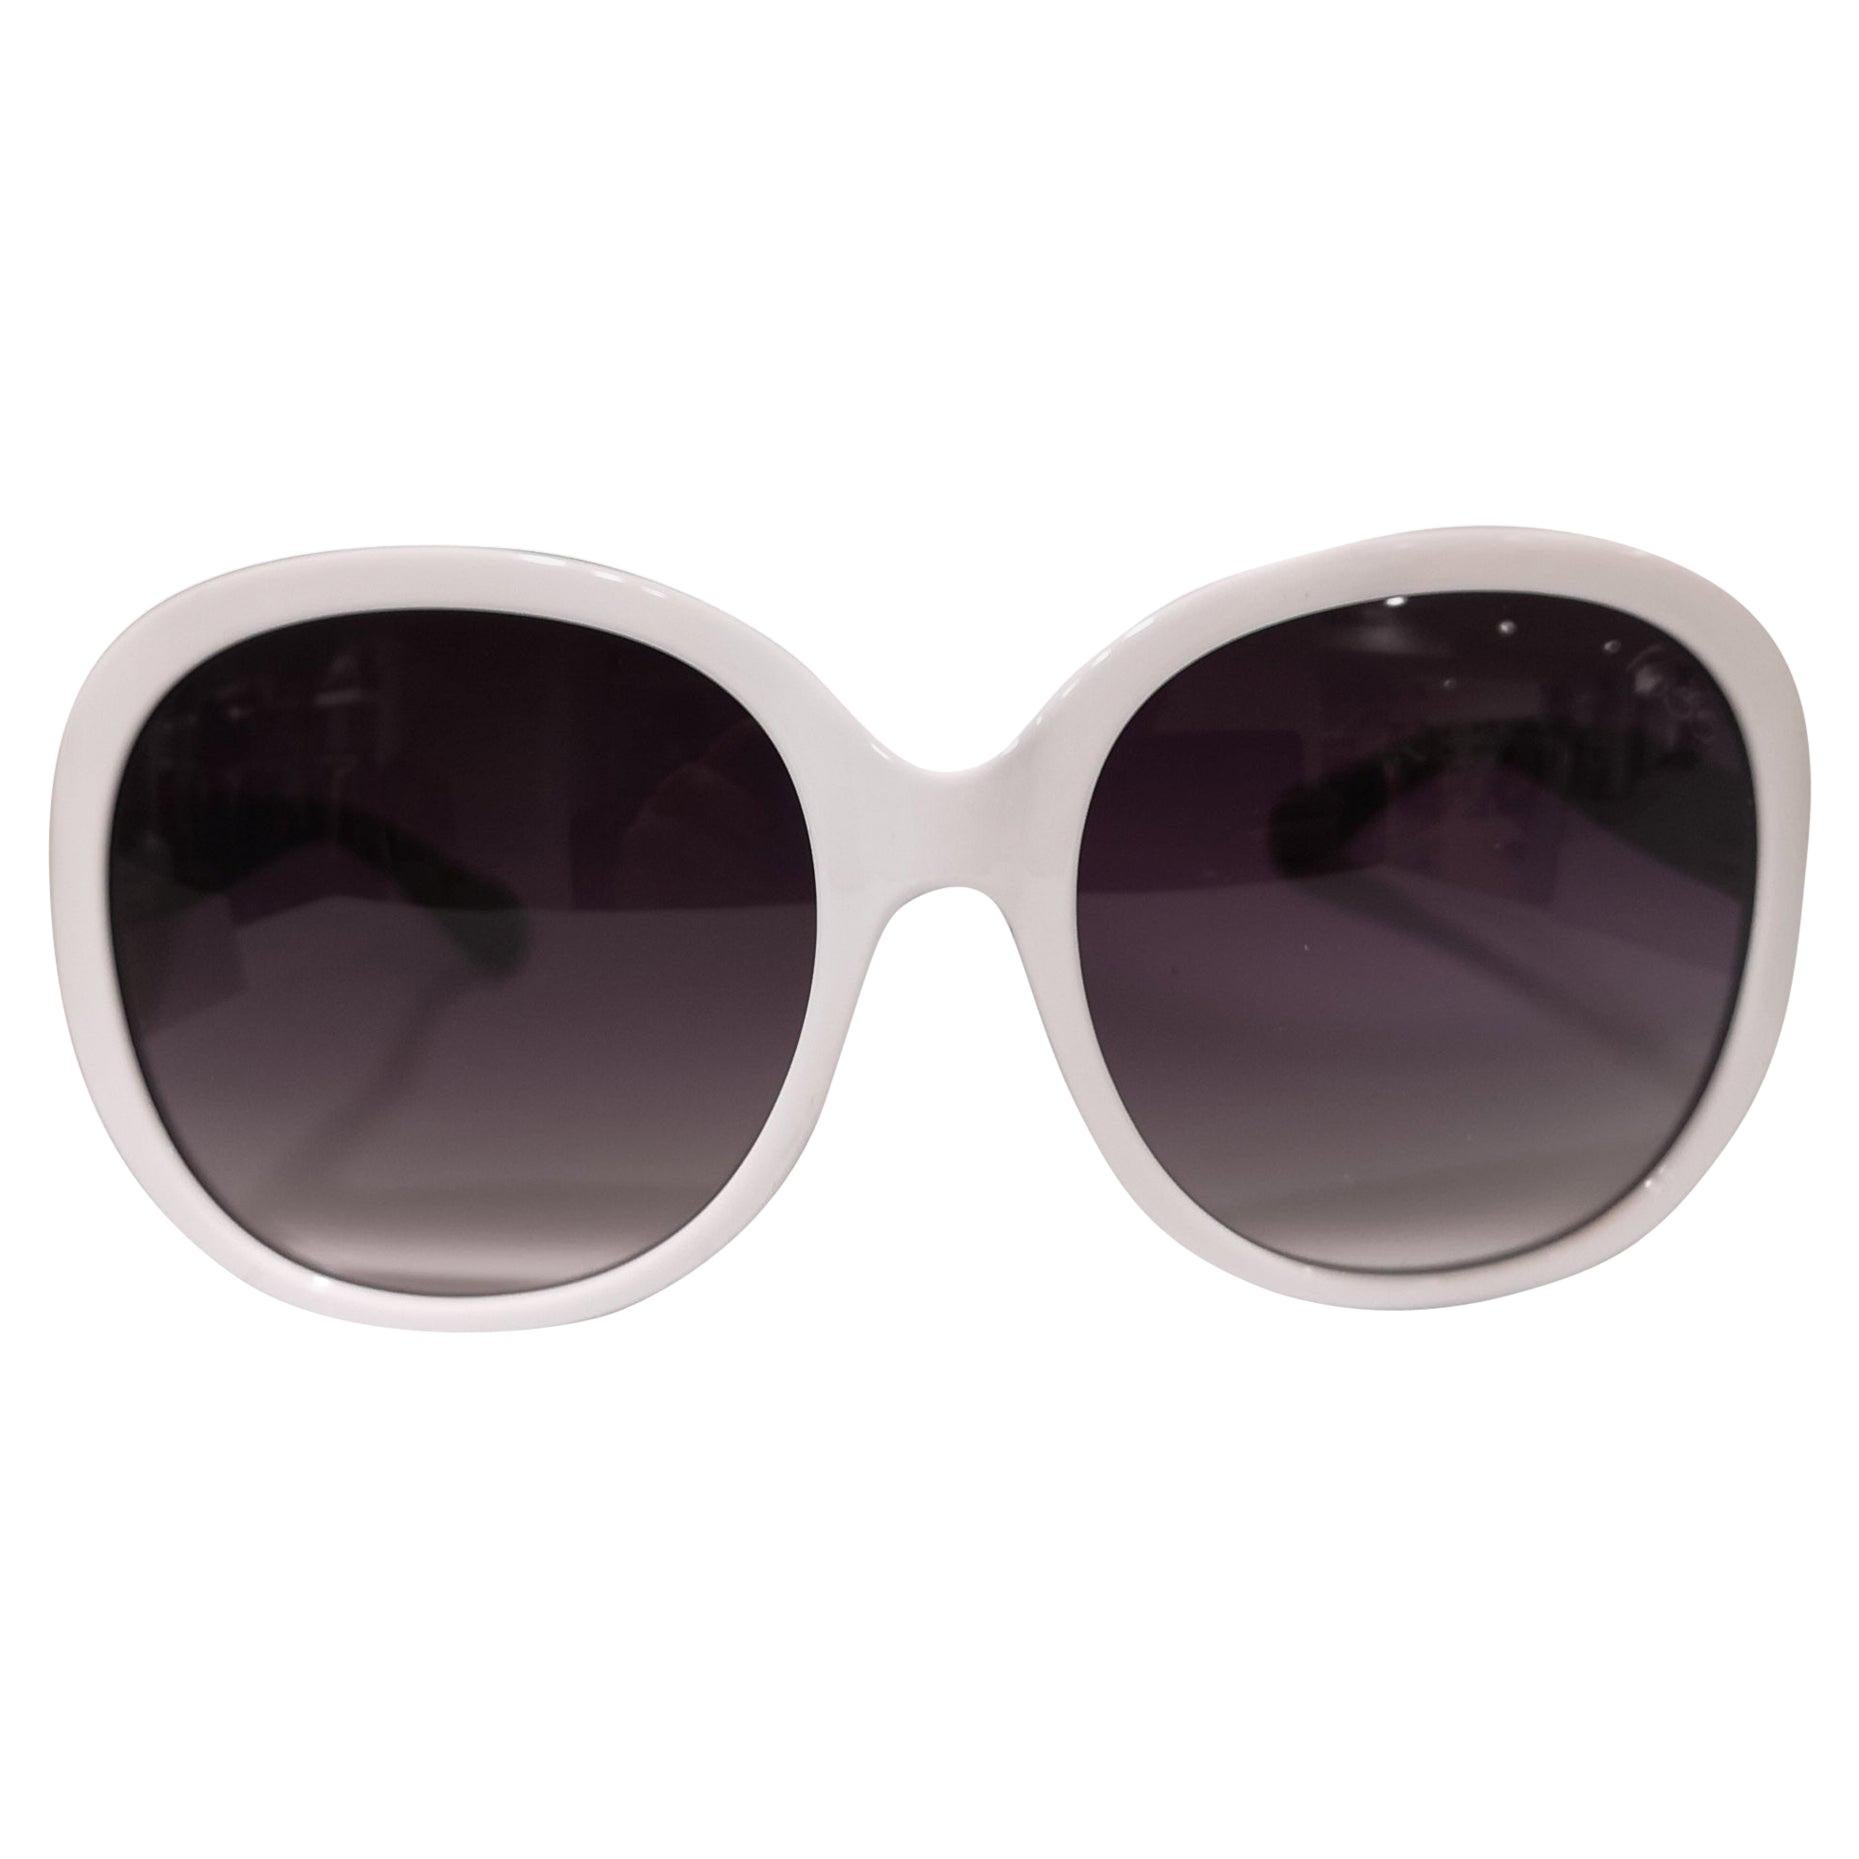 Luisstyle white sunglasses NWOT 